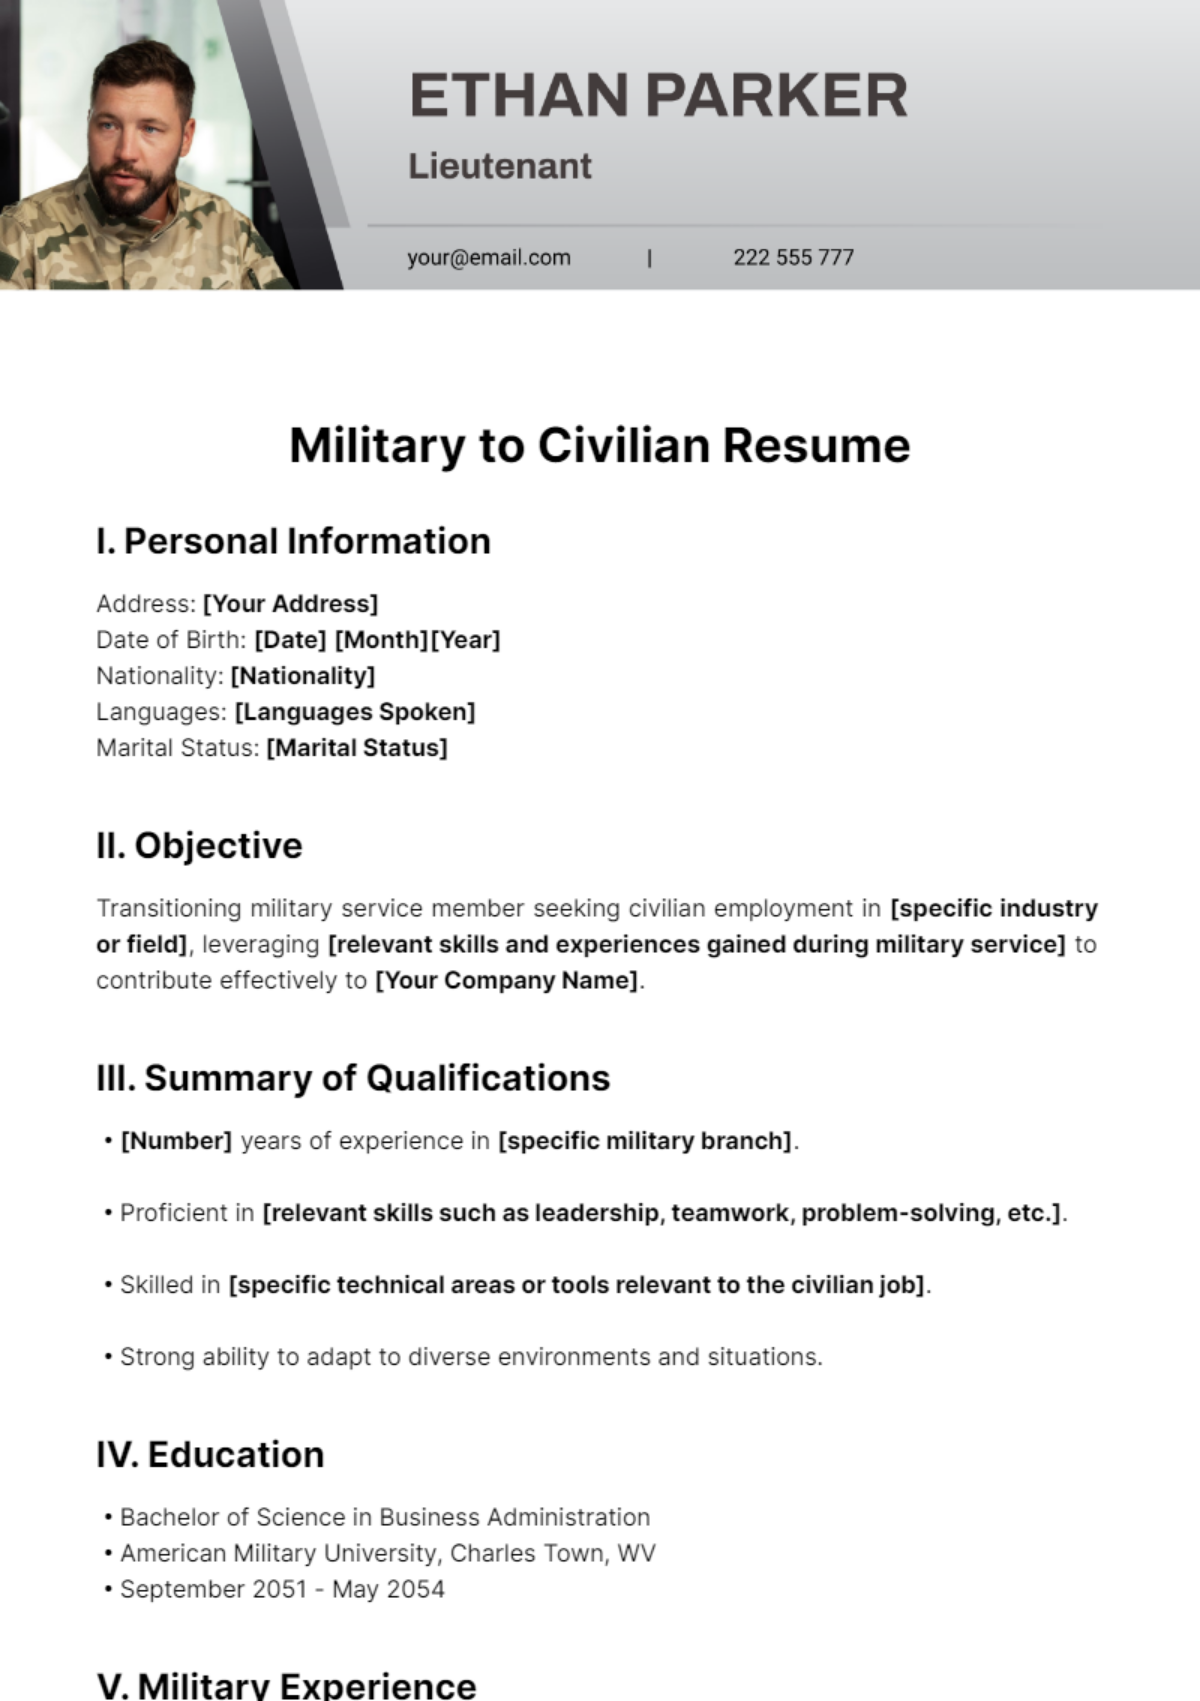 Military to Civilian Resume Template